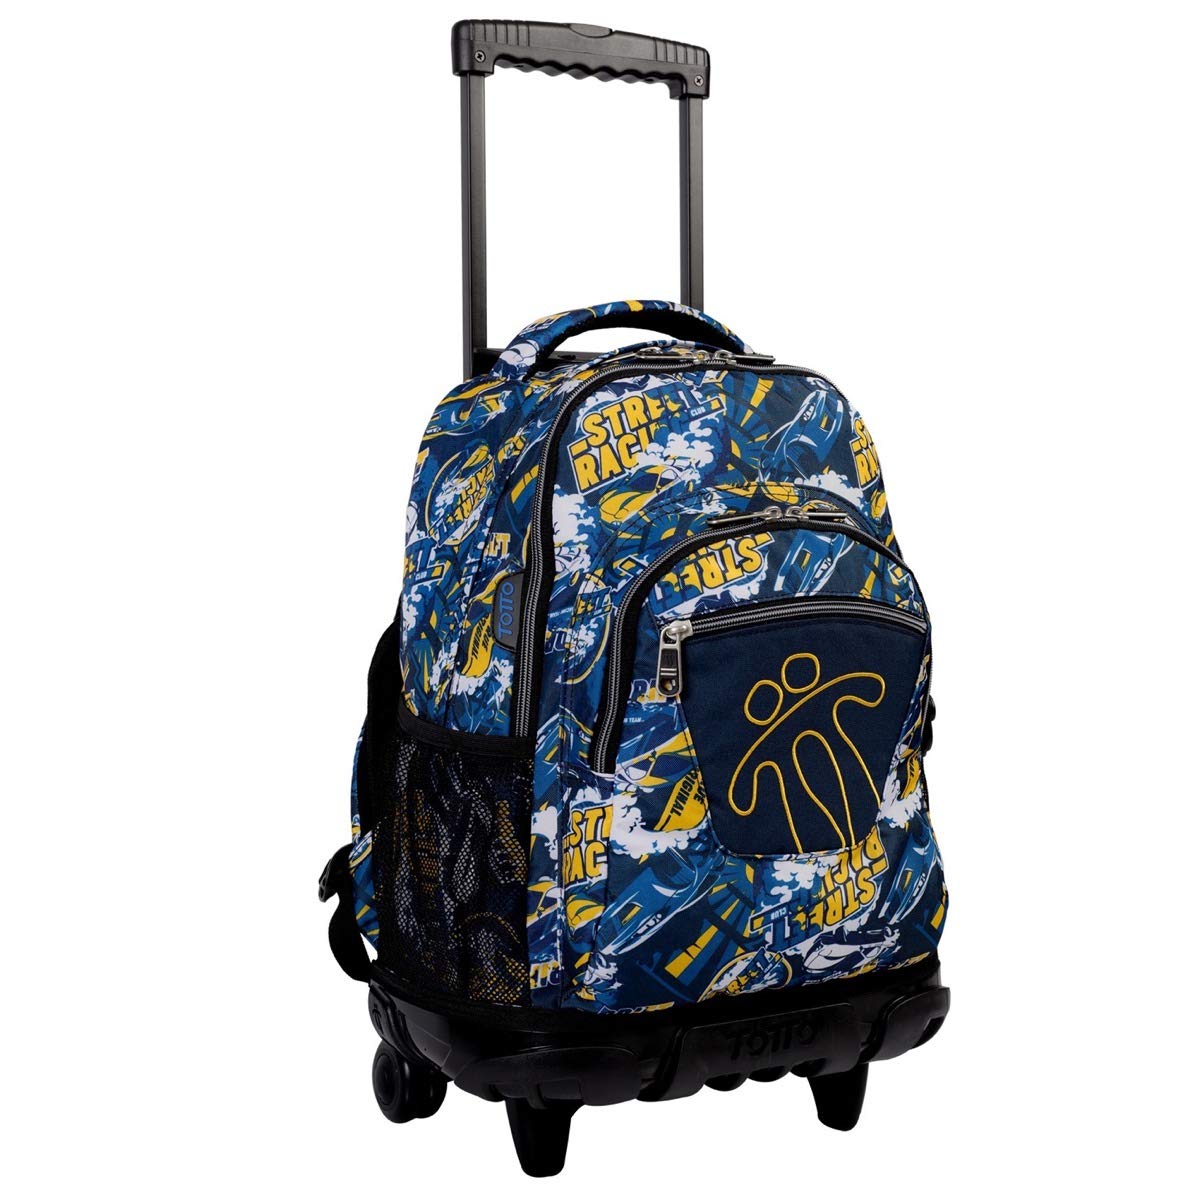 TOTTO 182 Backpack, 52 cm, 37 liters, Multicolour (Multicolor) –